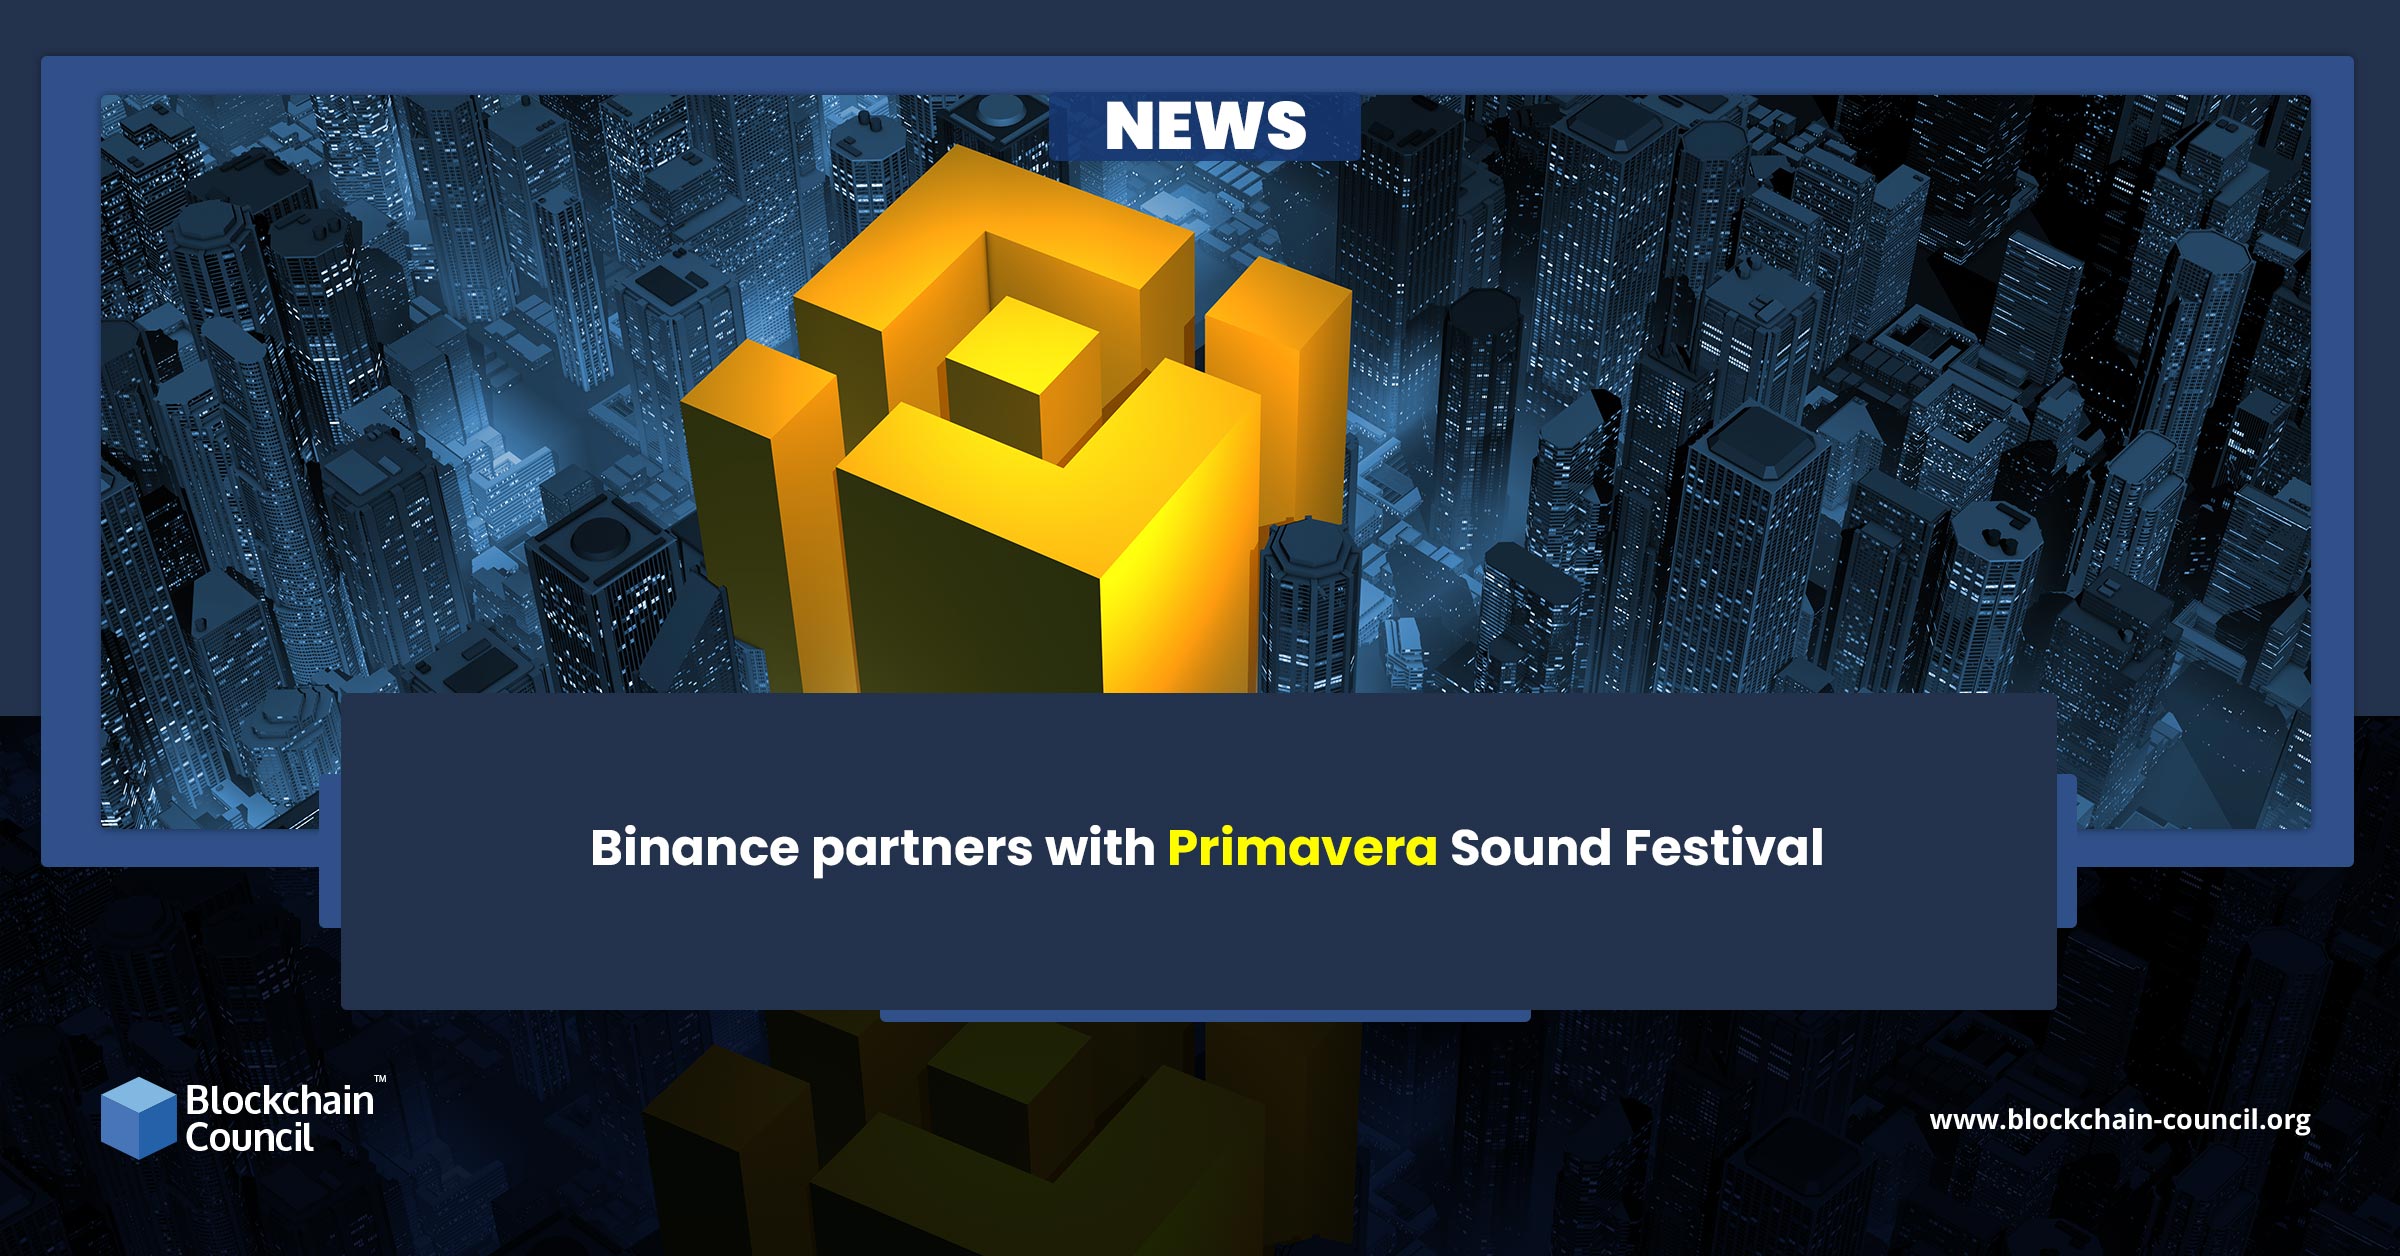 Binance partners with Primavera Sound Festival